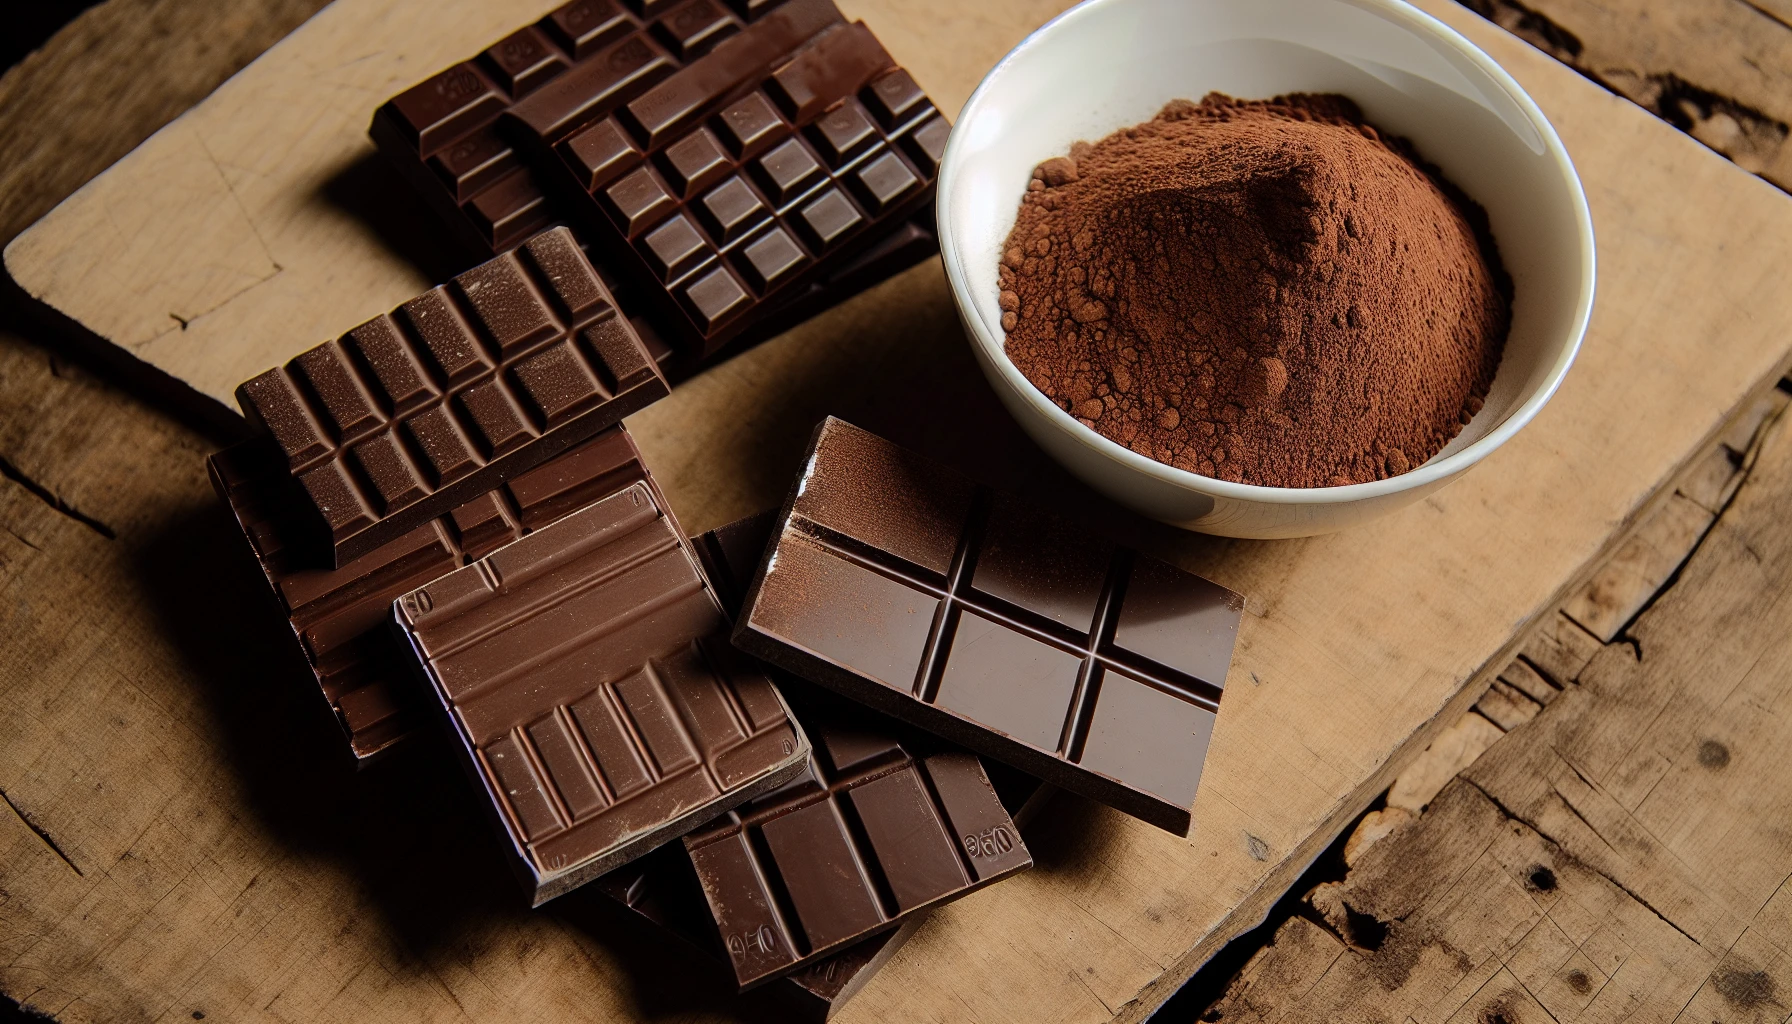 Variety of chocolate bars and cocoa powder